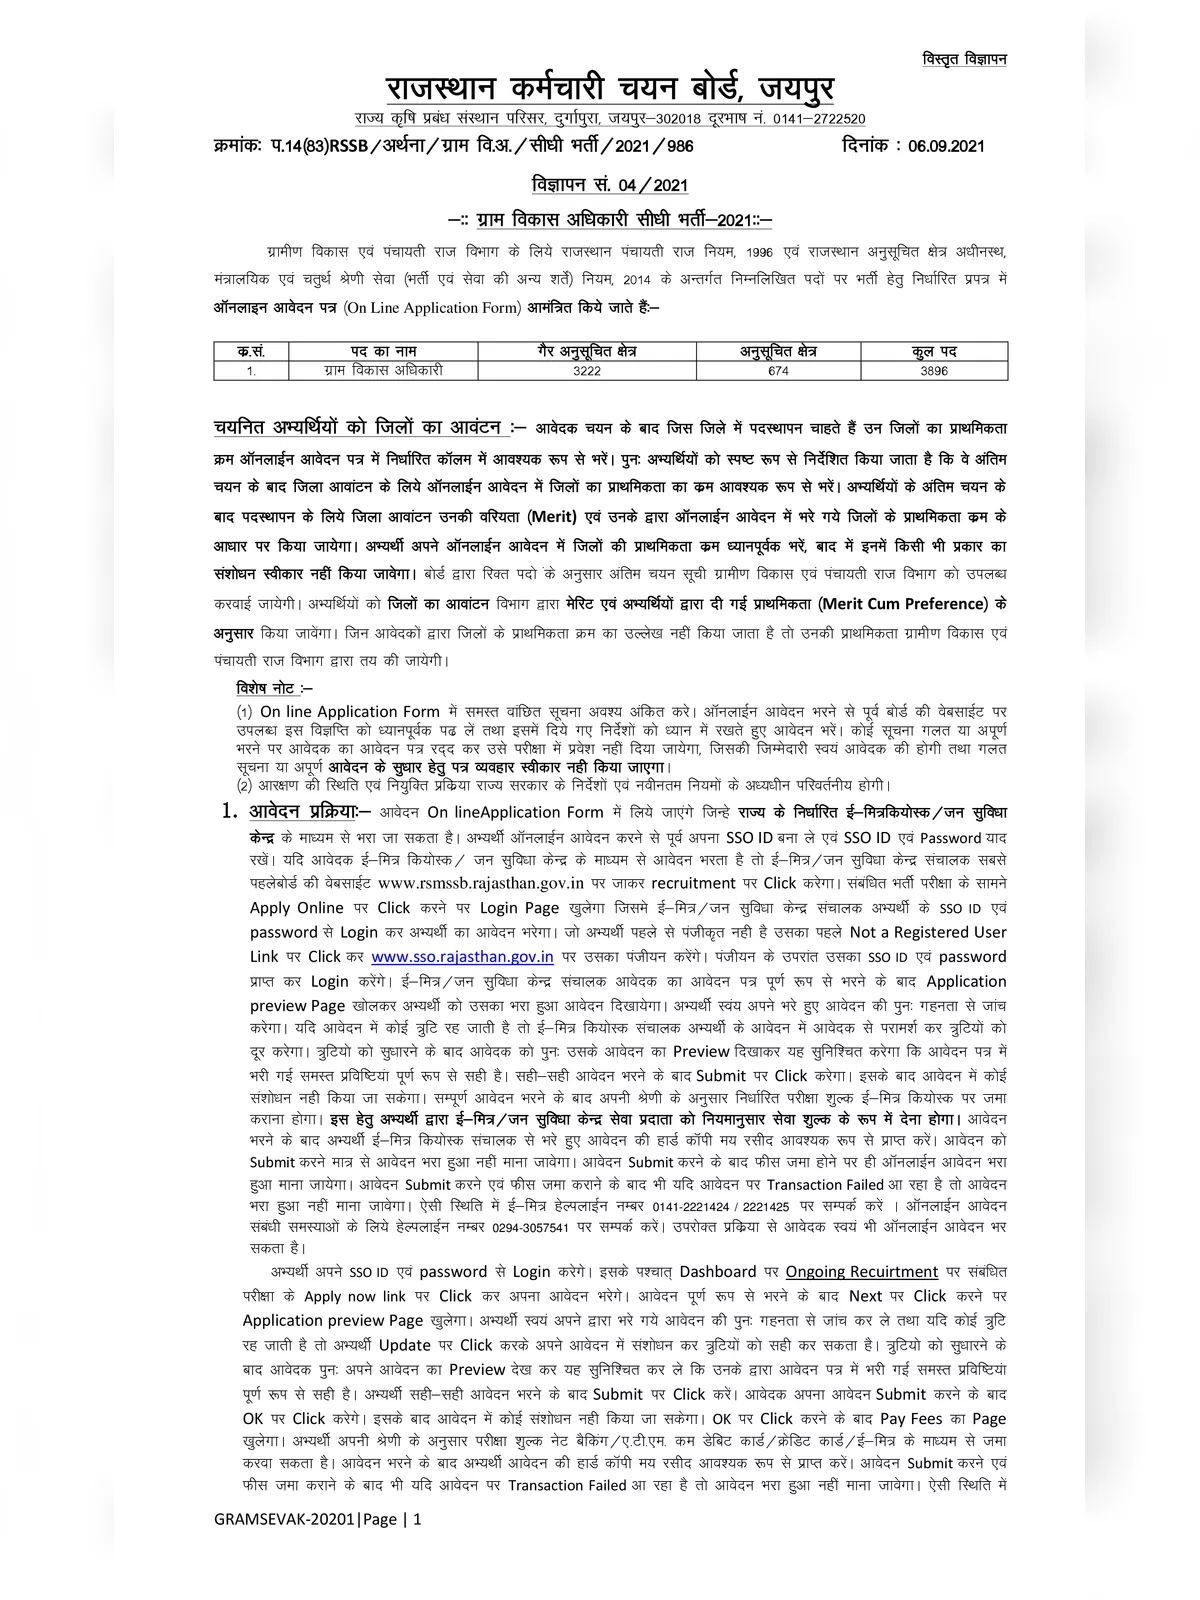 राजस्थान ग्राम सेवक भर्ती 2021 – Rajasthan Gram Sevak Bharti 2021 Notification